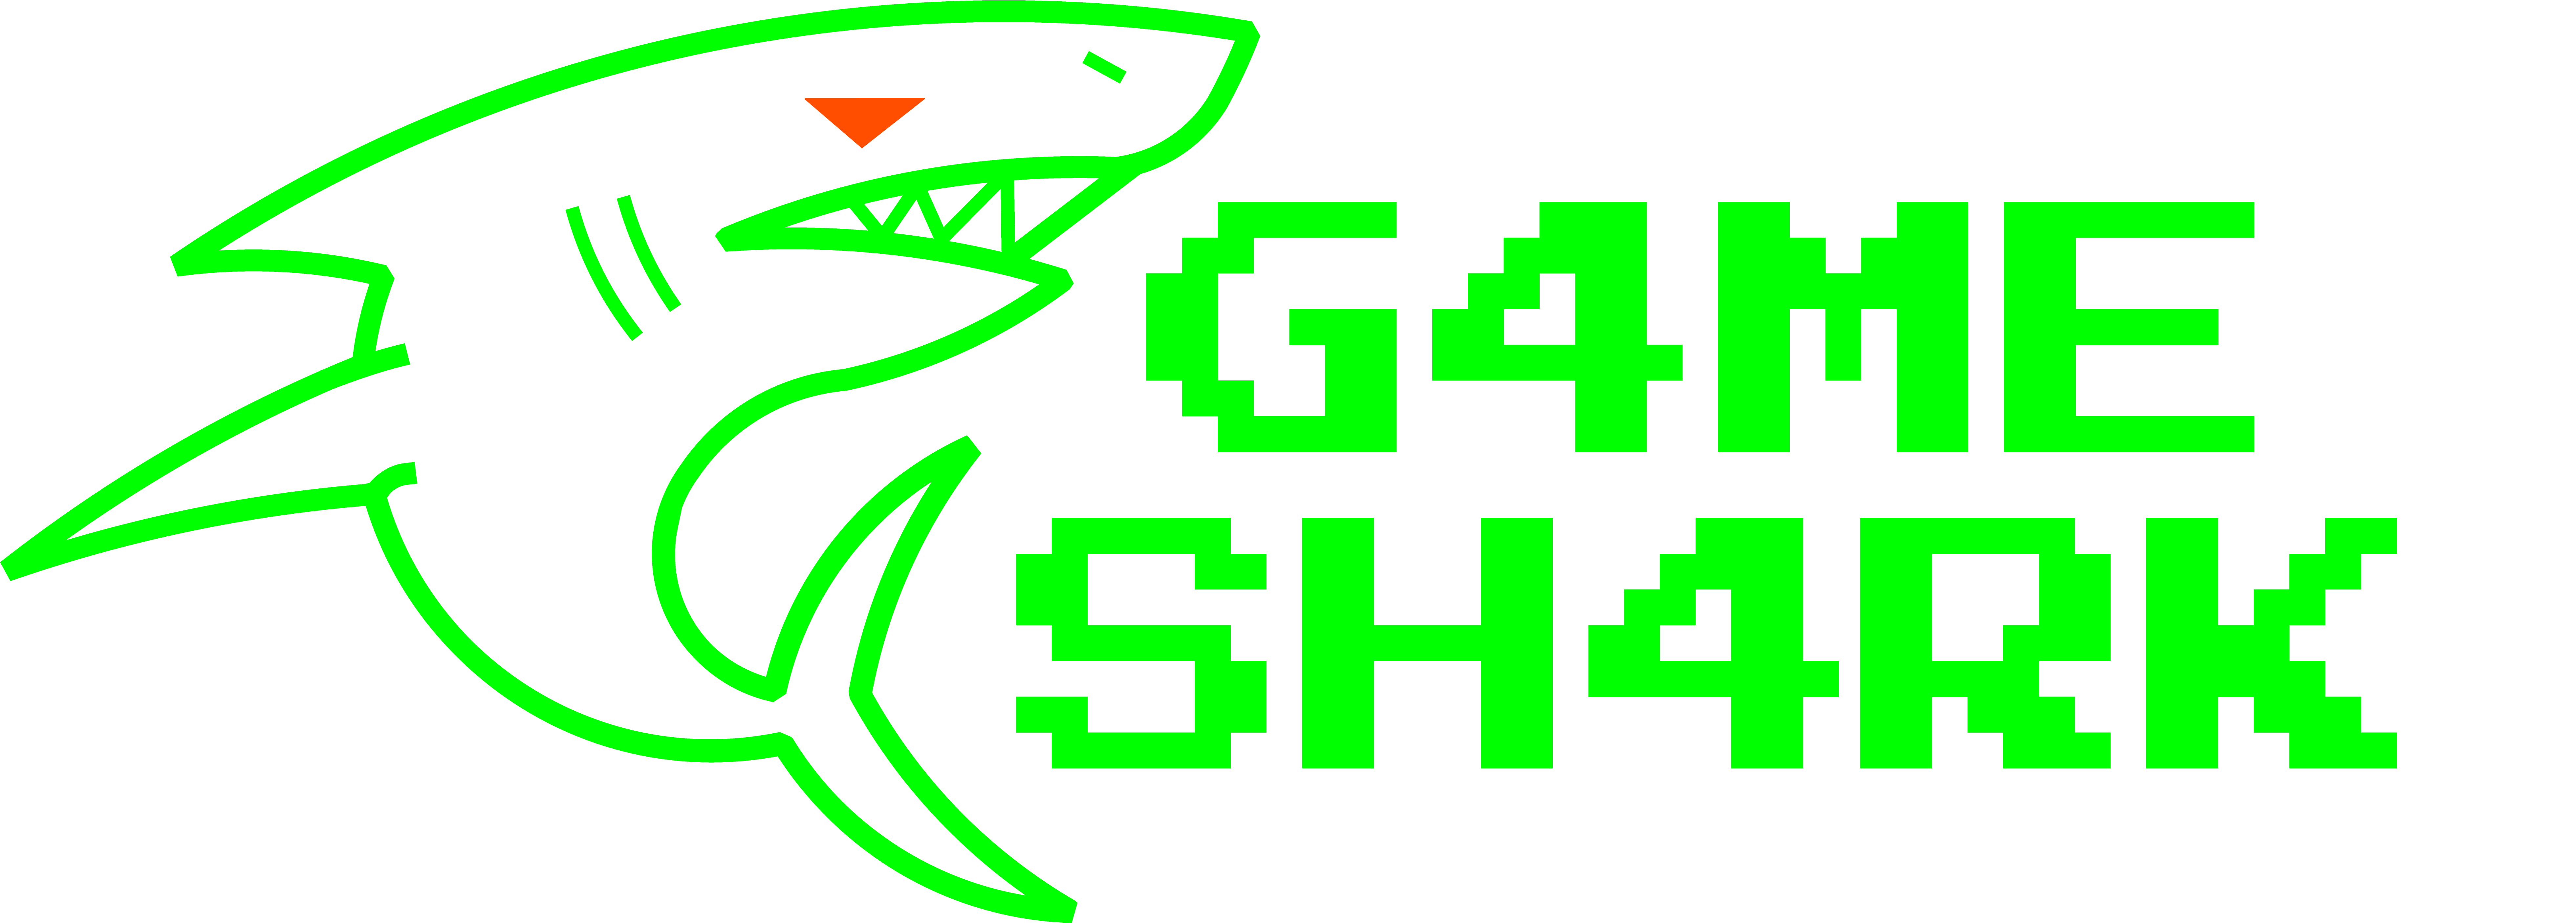 Game Shark